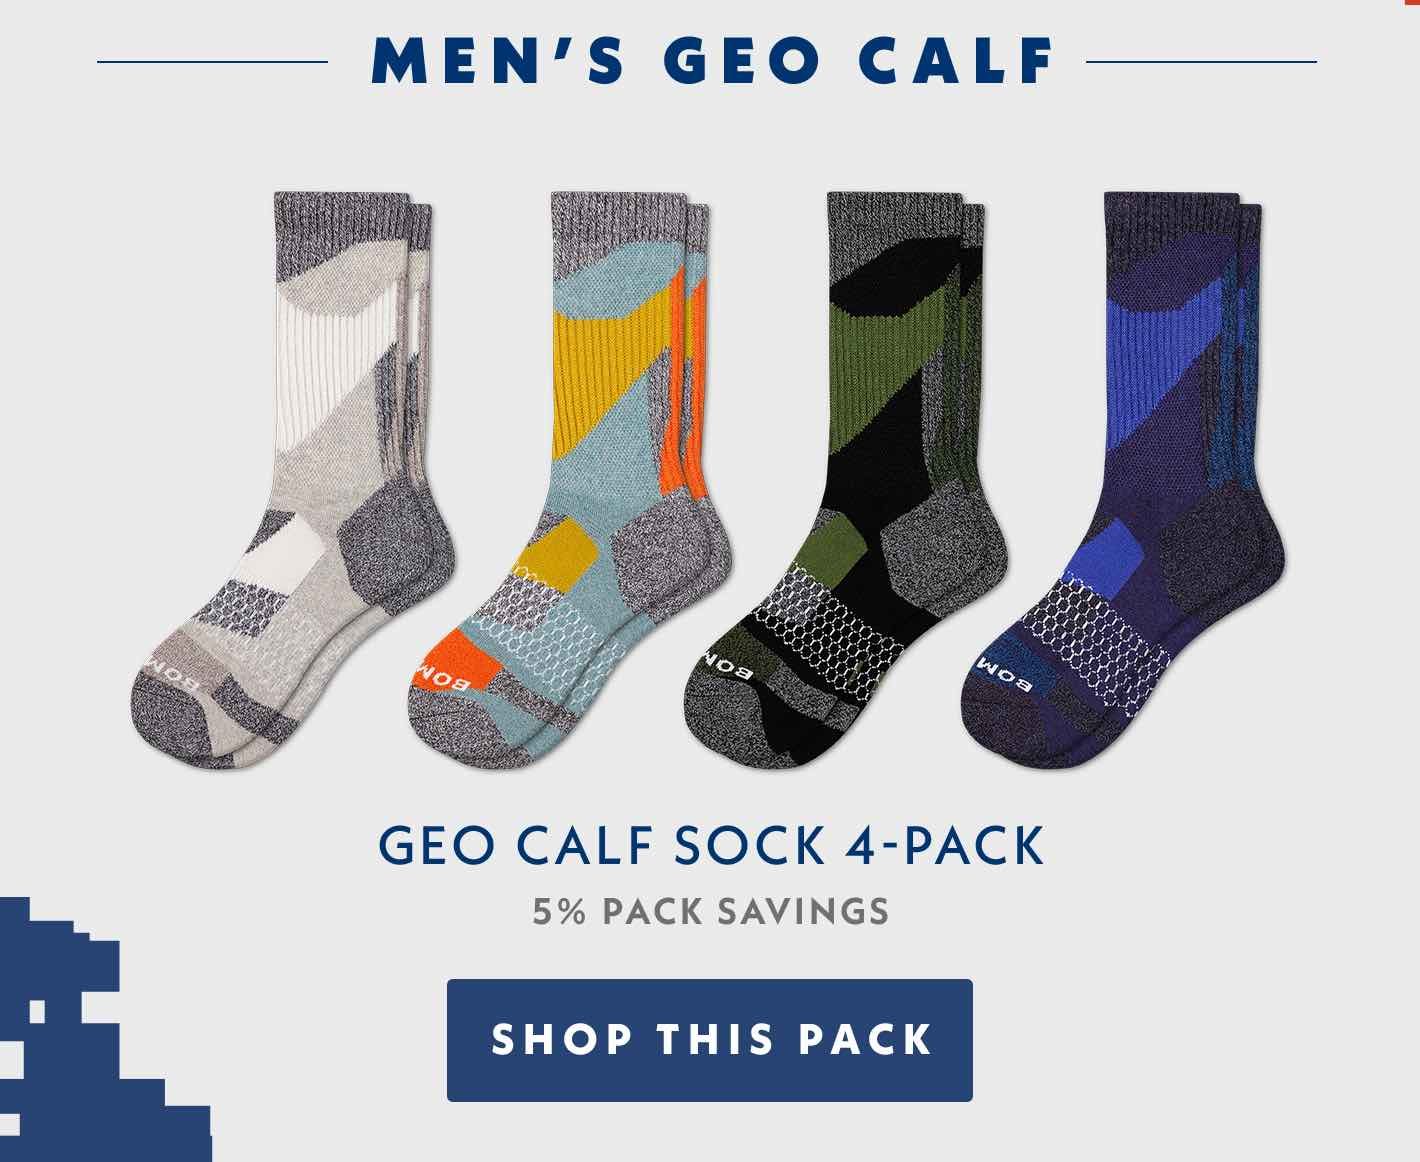 Geo Calf Sock 4-Pack. Shop This Pack.